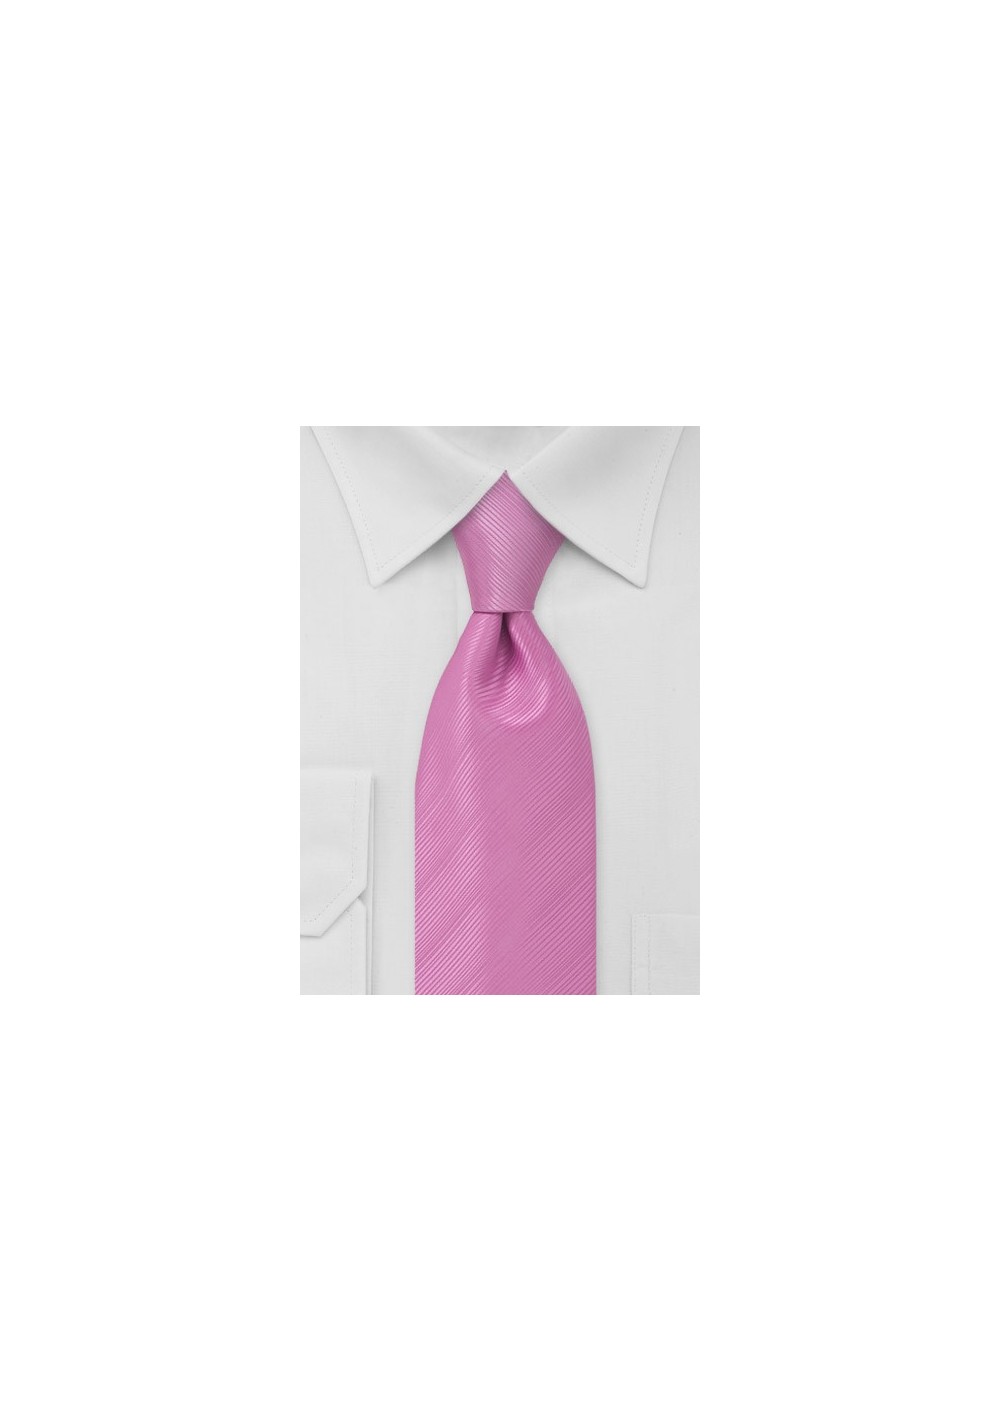 Necktie in Bubble Gum Pink